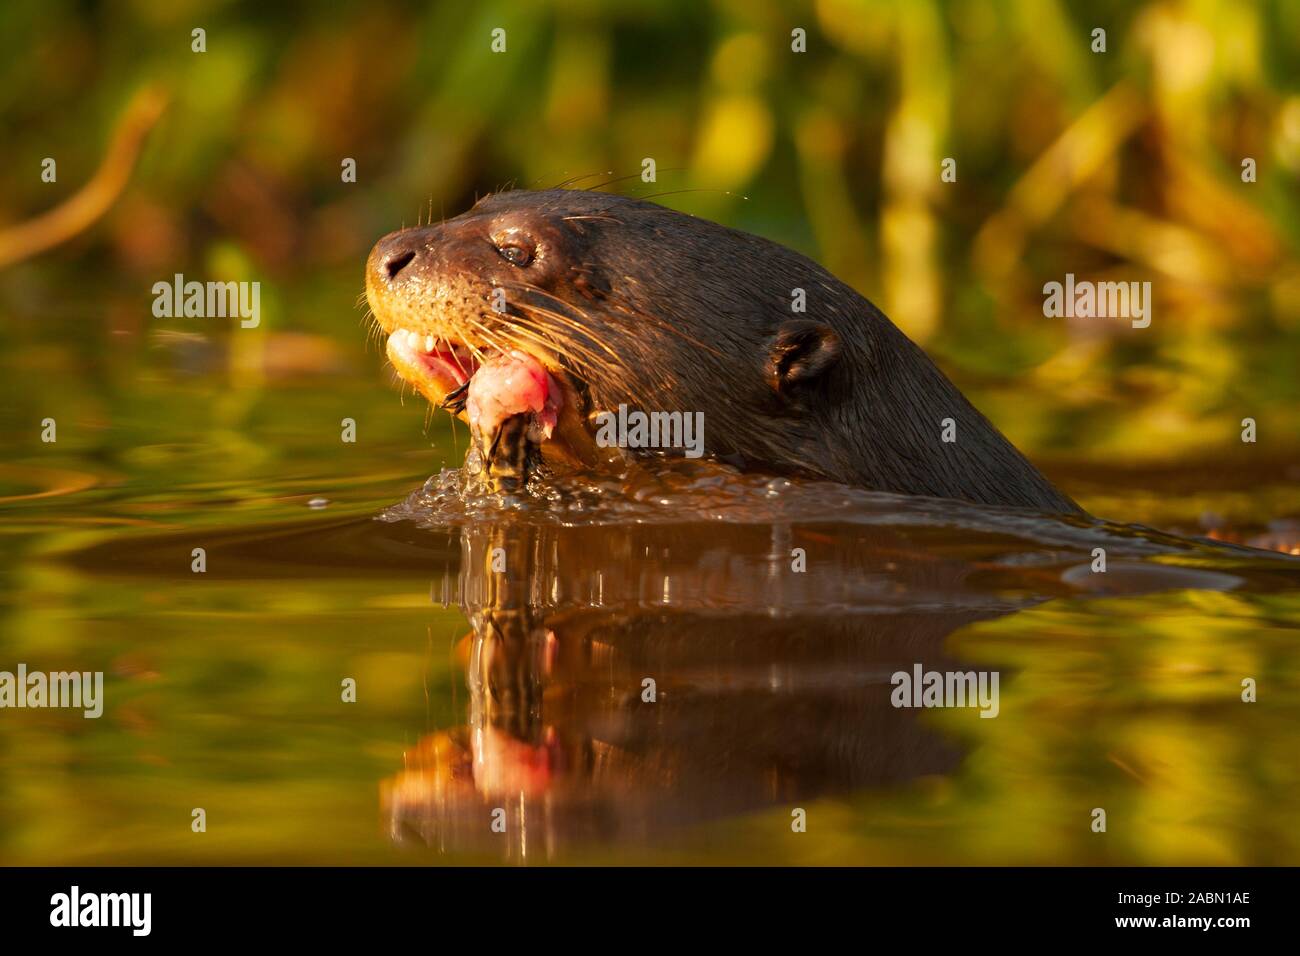 Giant Otter (Pteronura brasiliensis) eating fish Stock Photo